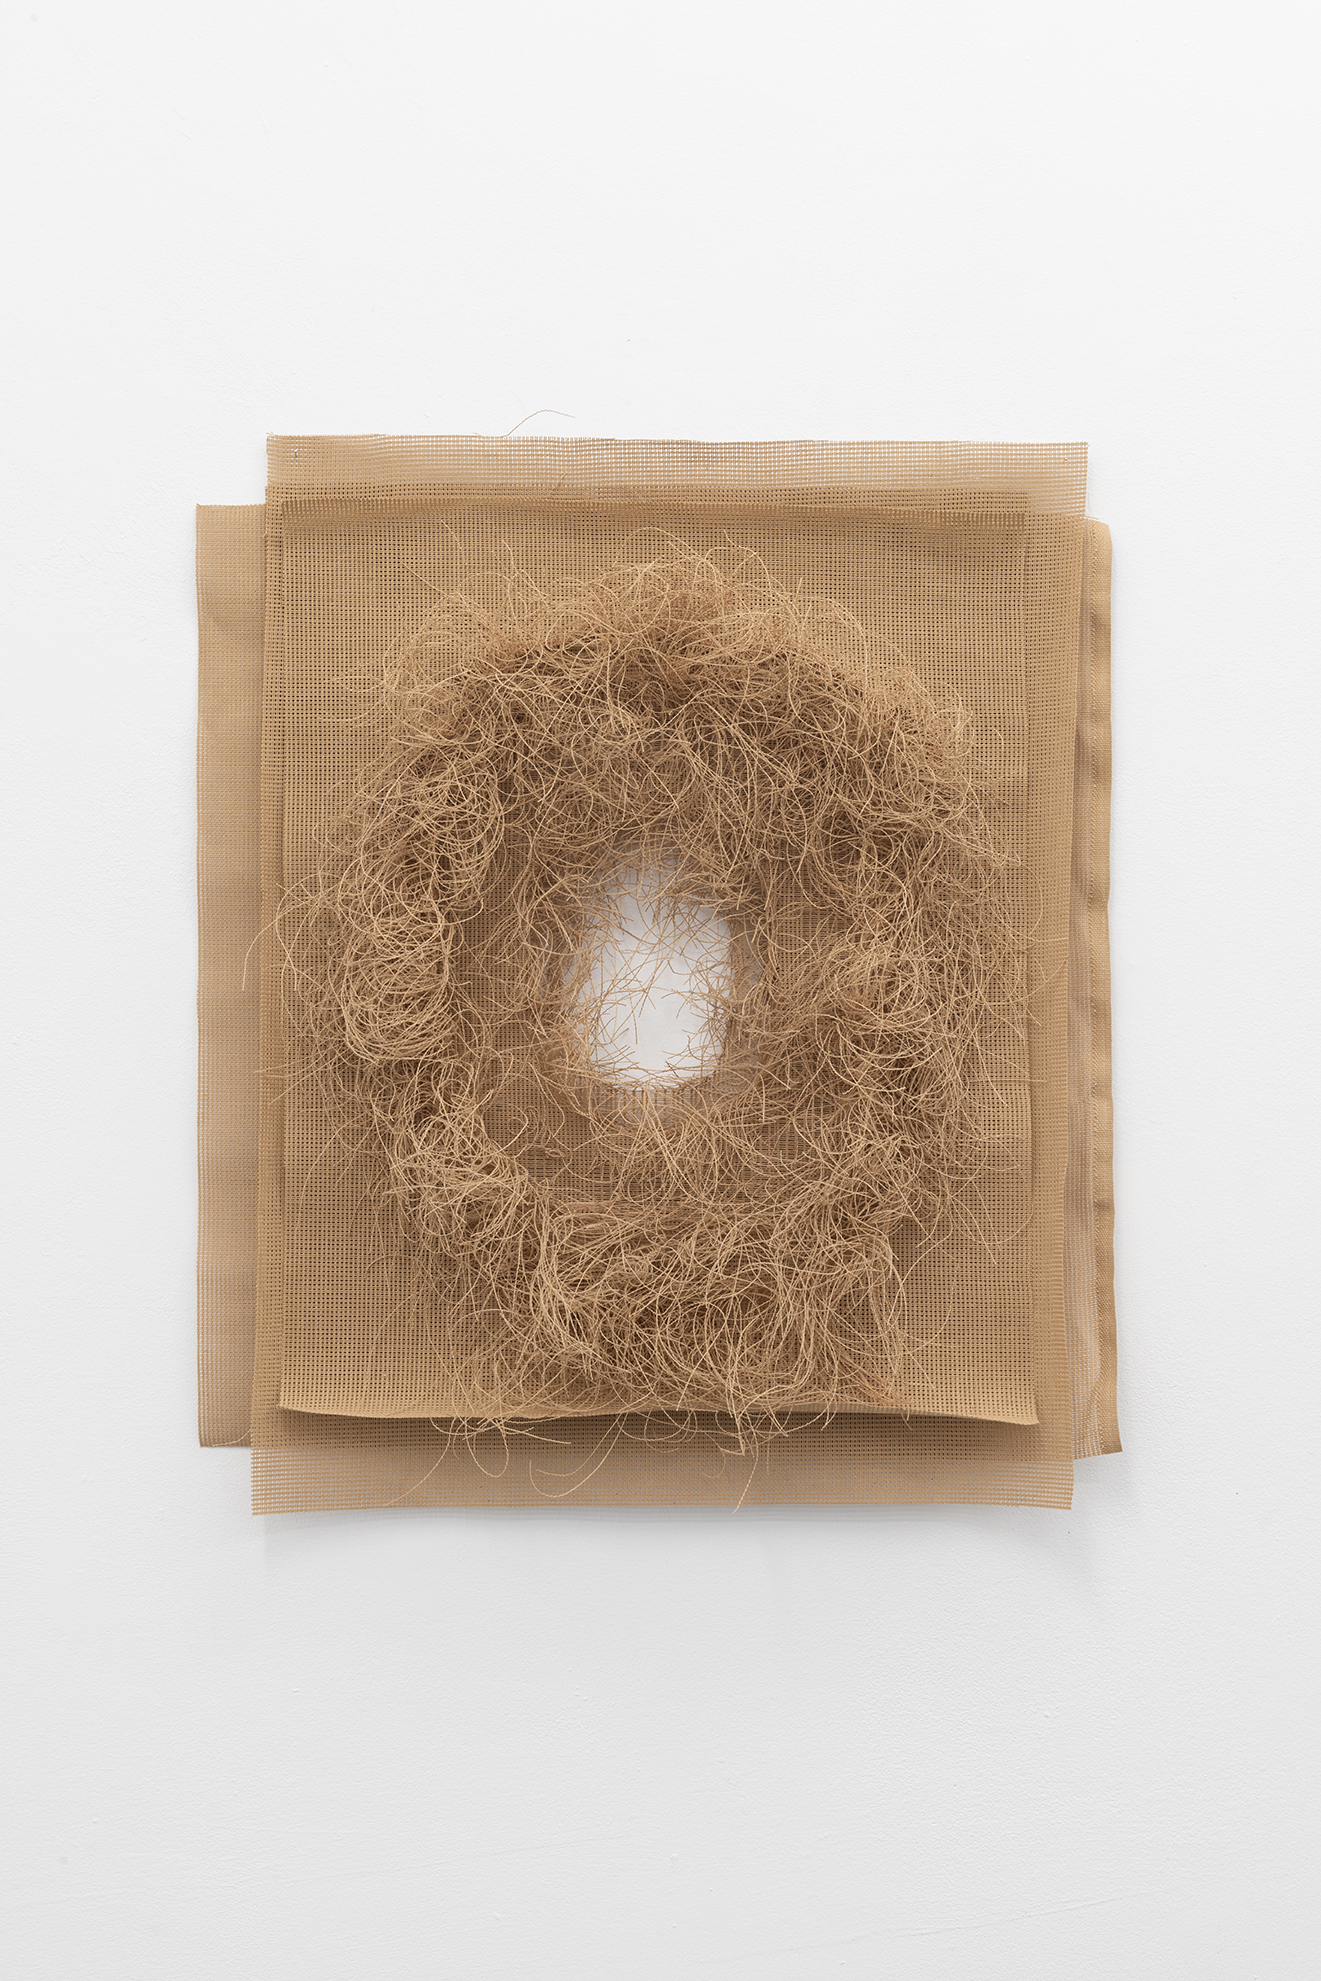 <p>Mesh (flax), layers of linen needlepoint mesh, 70cm x 60cm</p>
